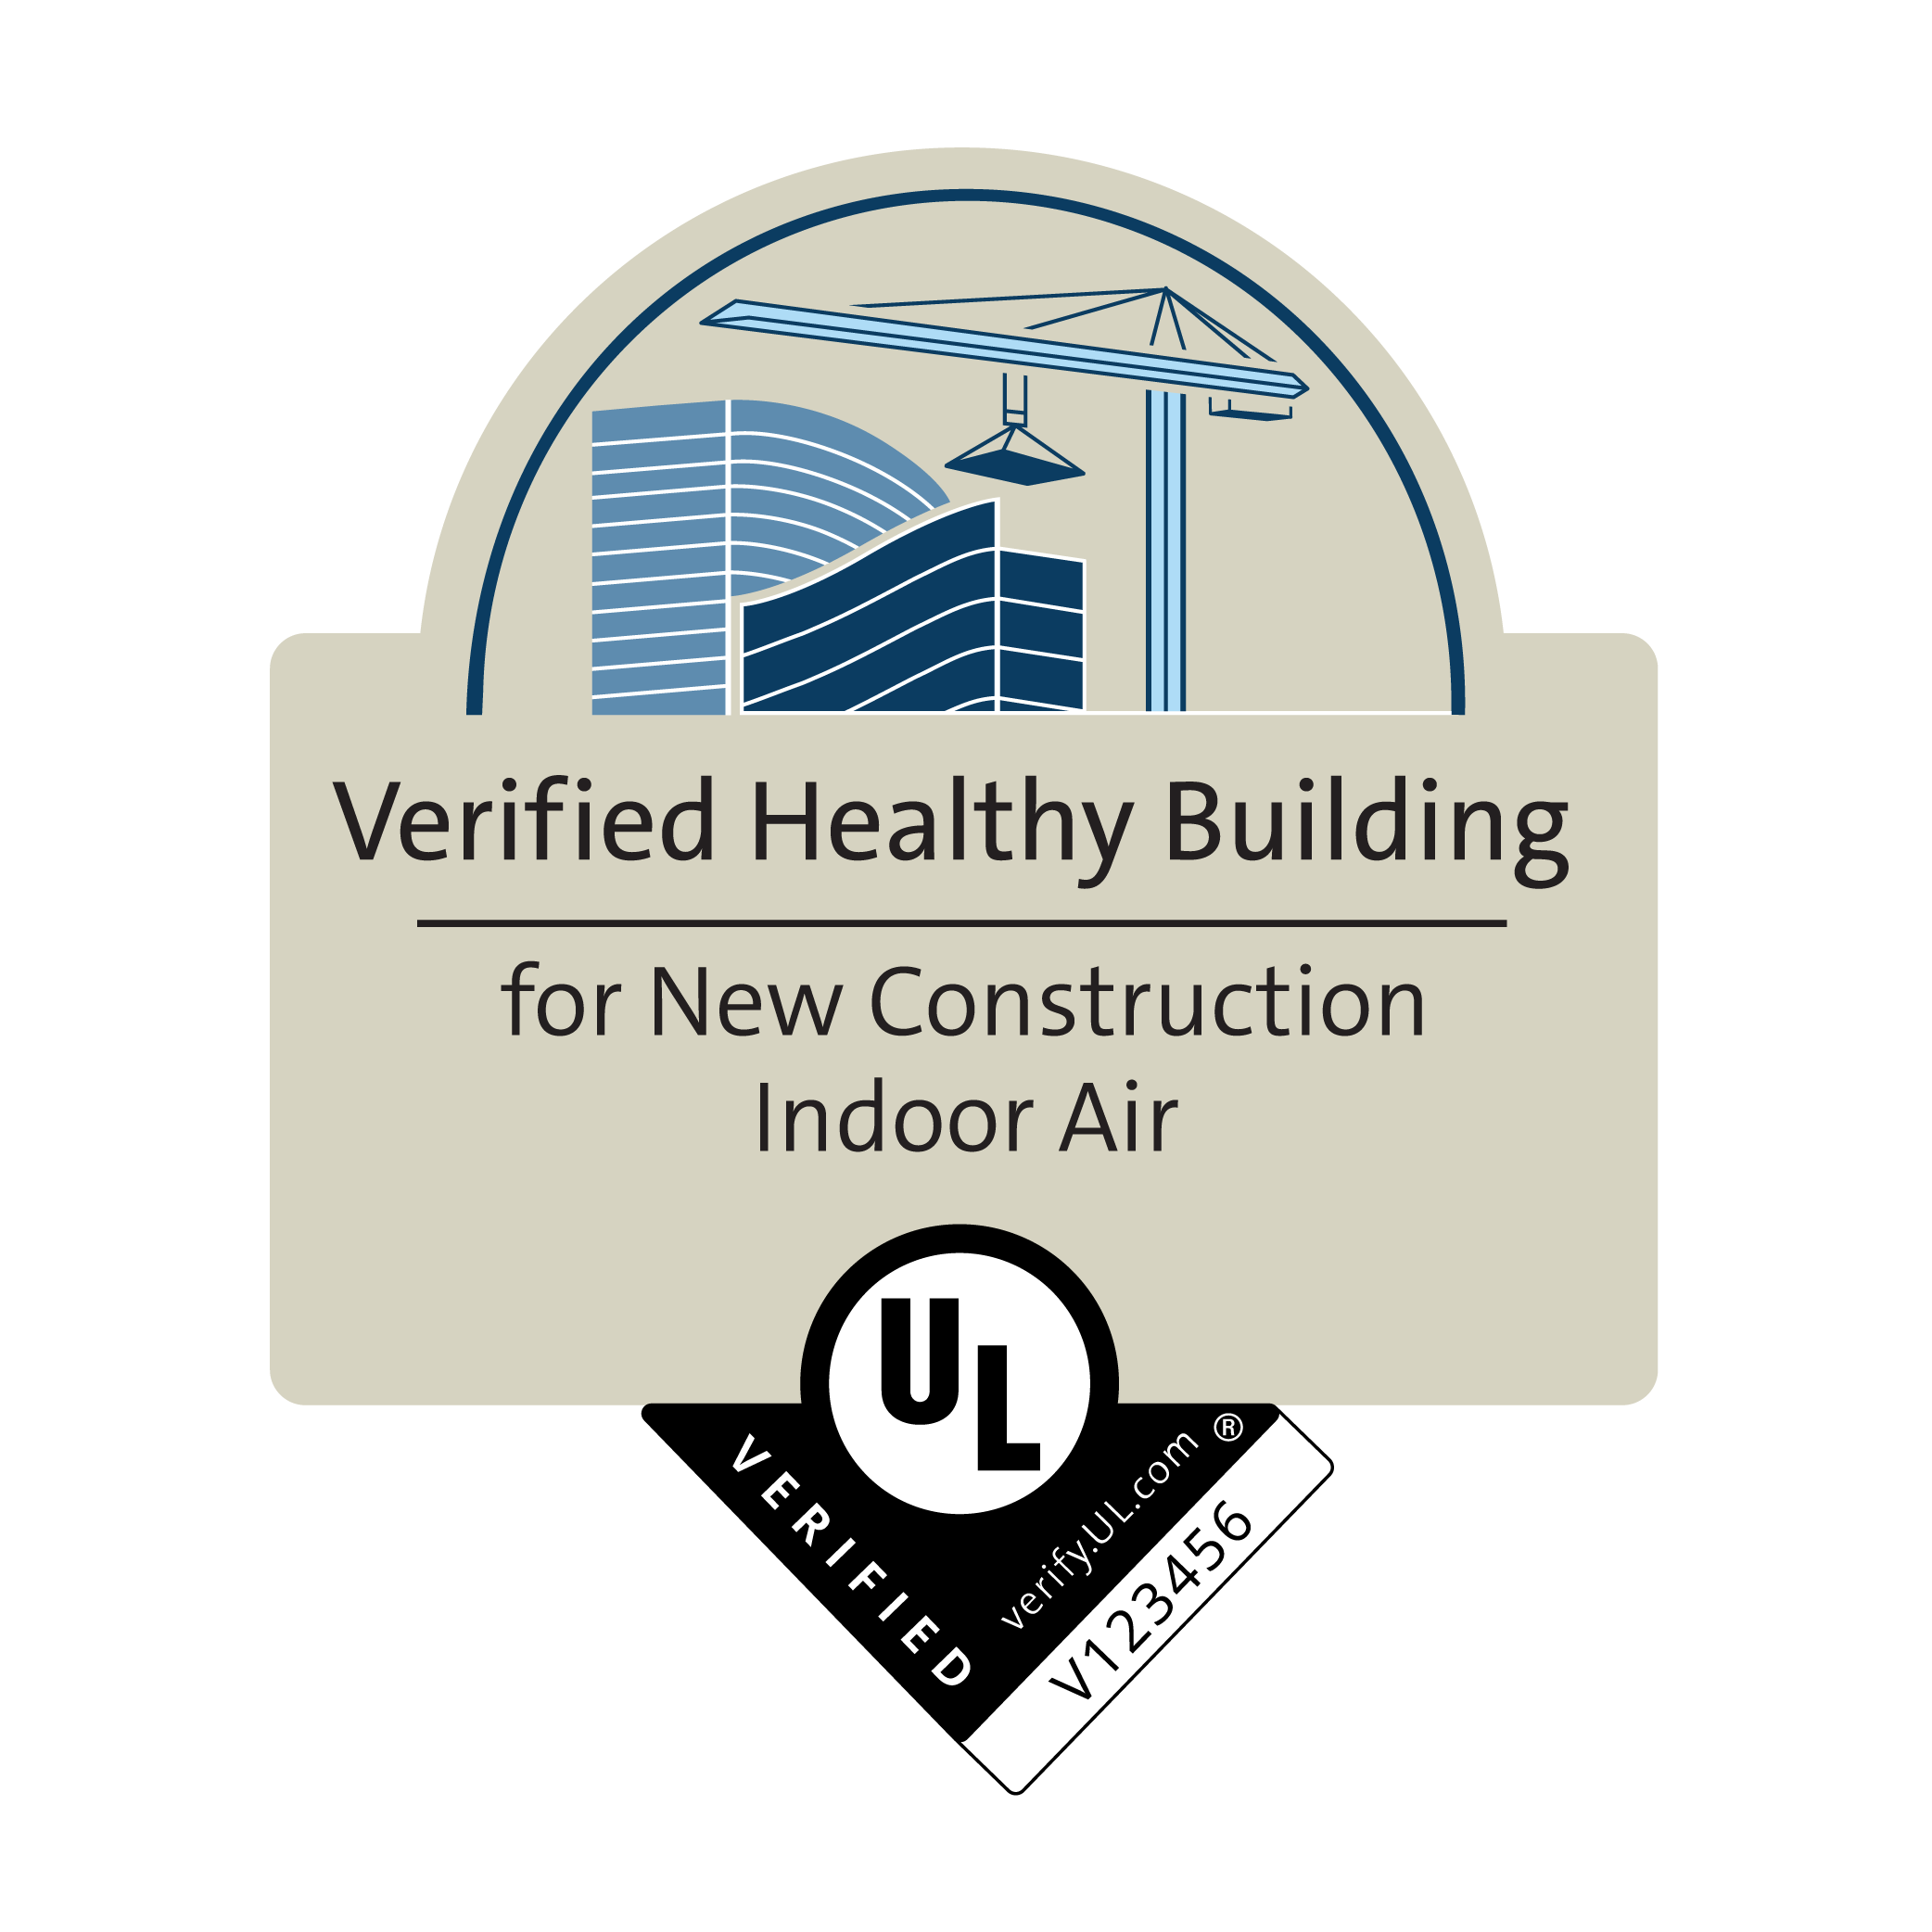 UL Verified Healthy Building for New Construction Indoor Air; 新建築室內空氣品質的 UL 健康建築驗證